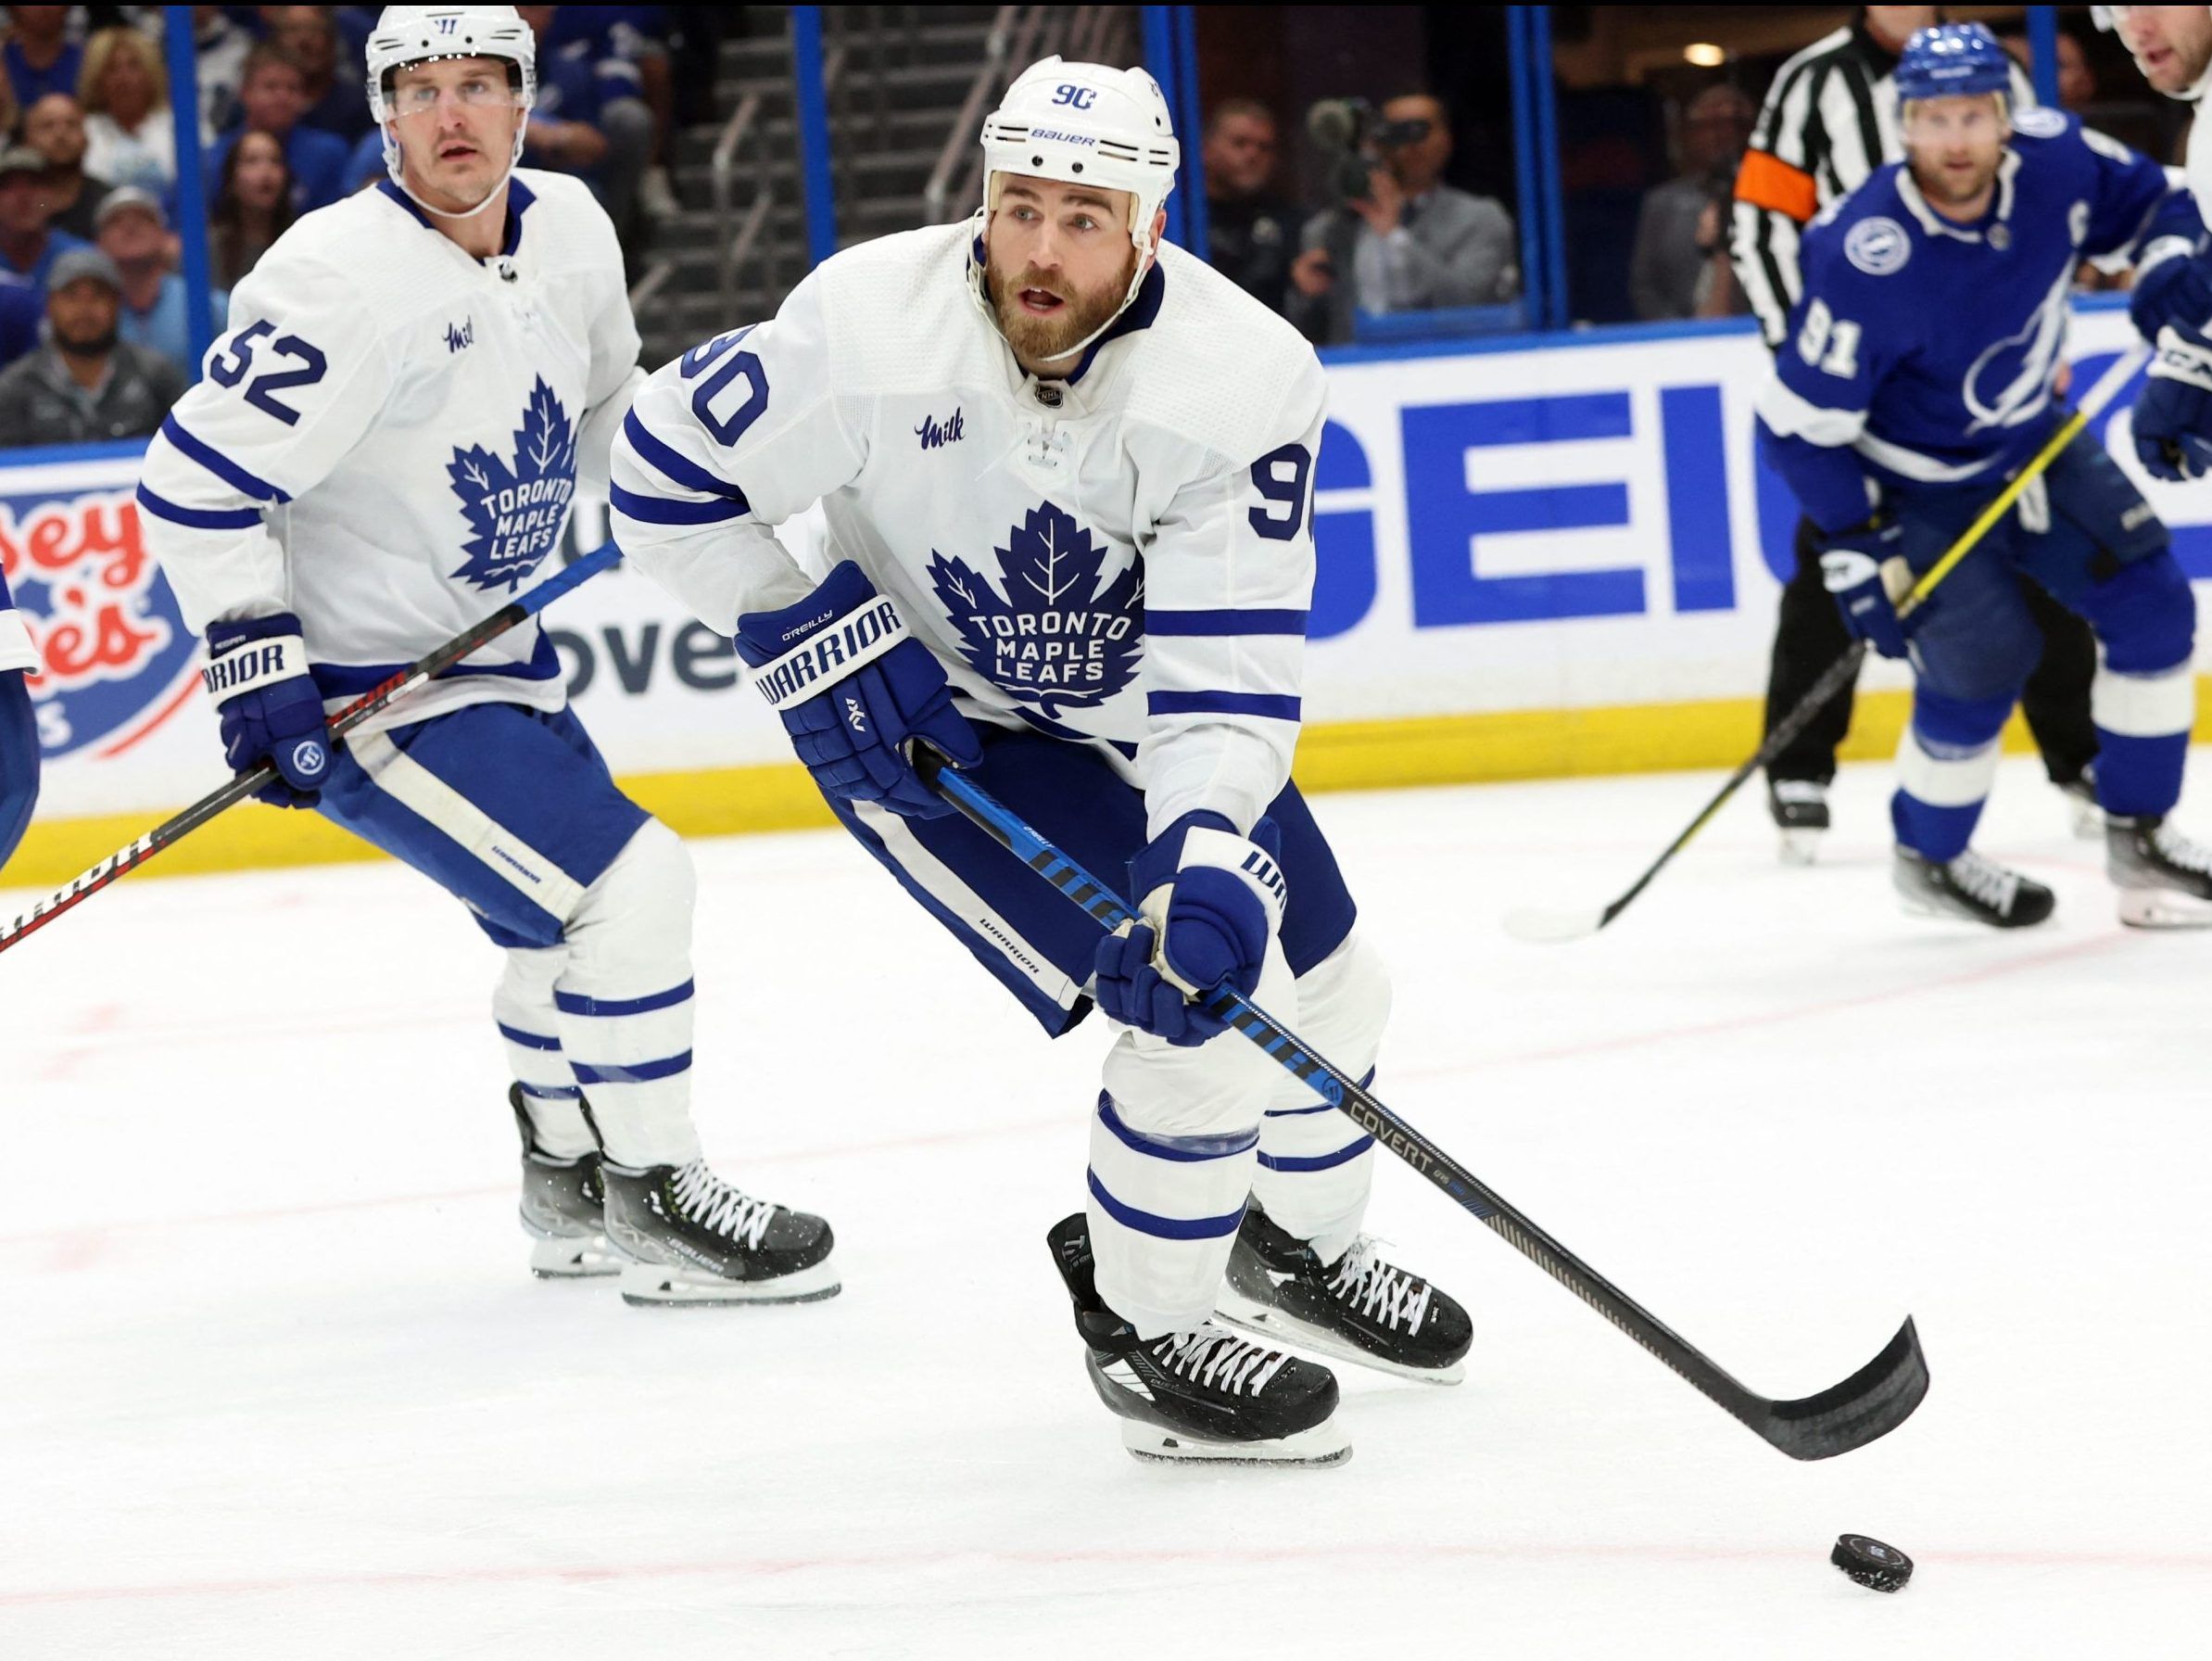 WARMINGTON Maple Leafs need to win for Bonnie OReilly Toronto Sun